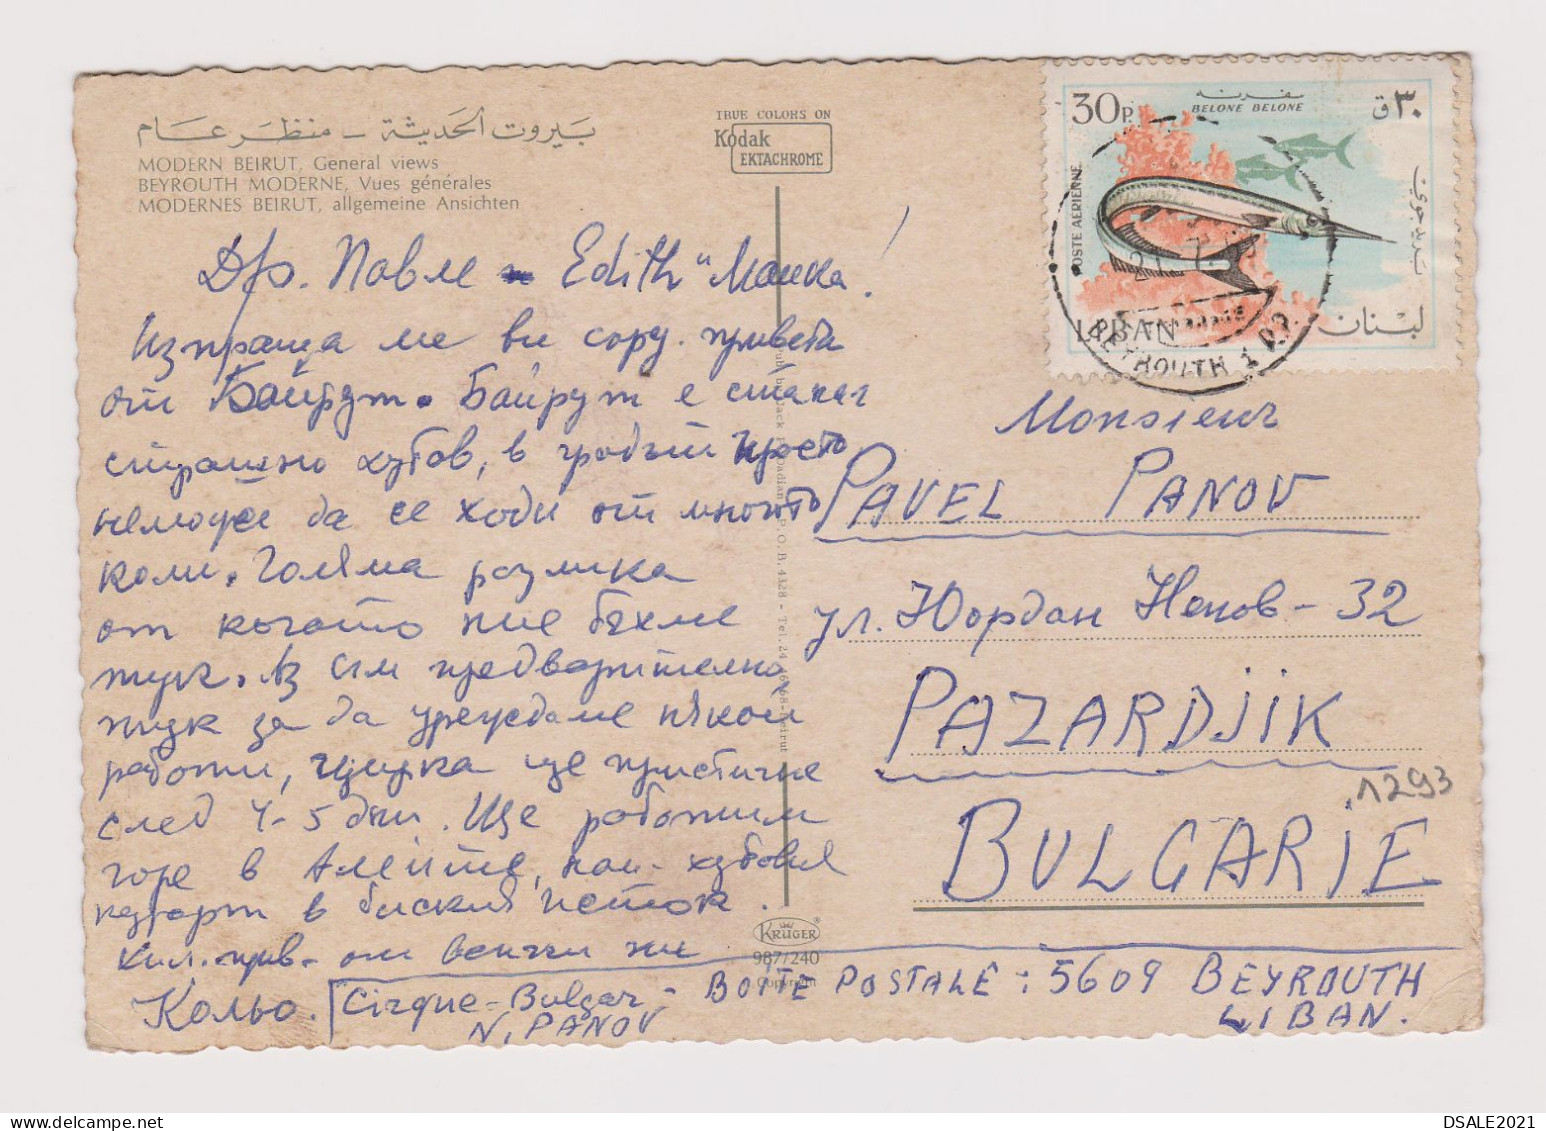 Lebanon BEIRUT Multiple Views, Vintage Photo Postcard W/Topic Stamp Fish 1960s Sent Abroad To Bulgaria (1293) - Liban